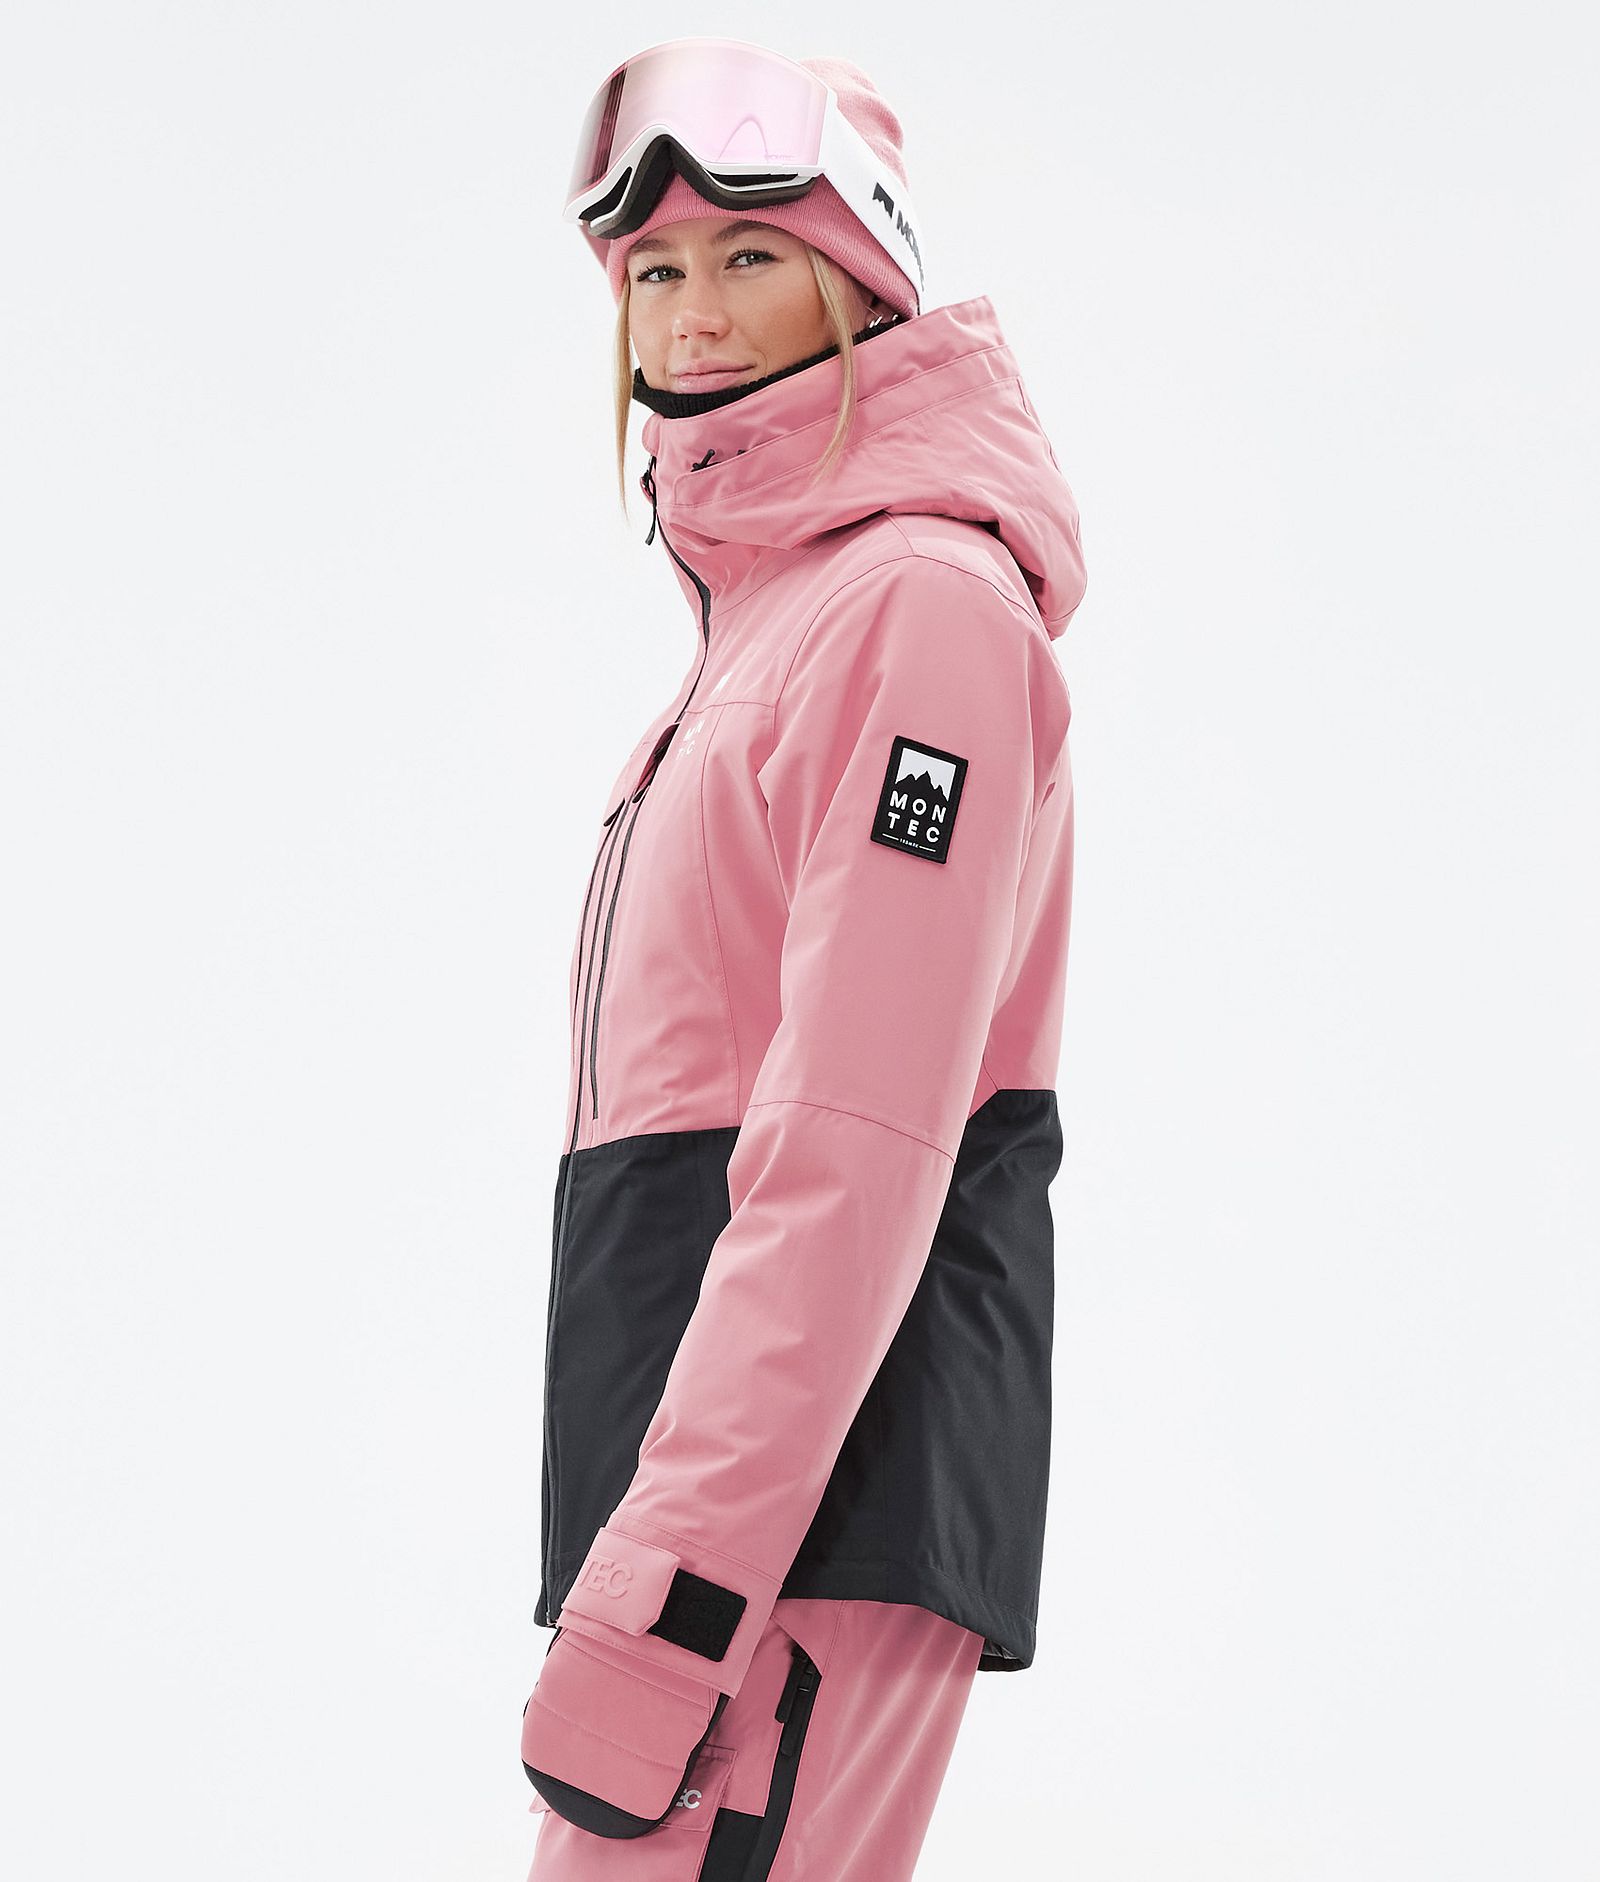 Moss W Ski Jacket Women Pink/Black, Image 6 of 10